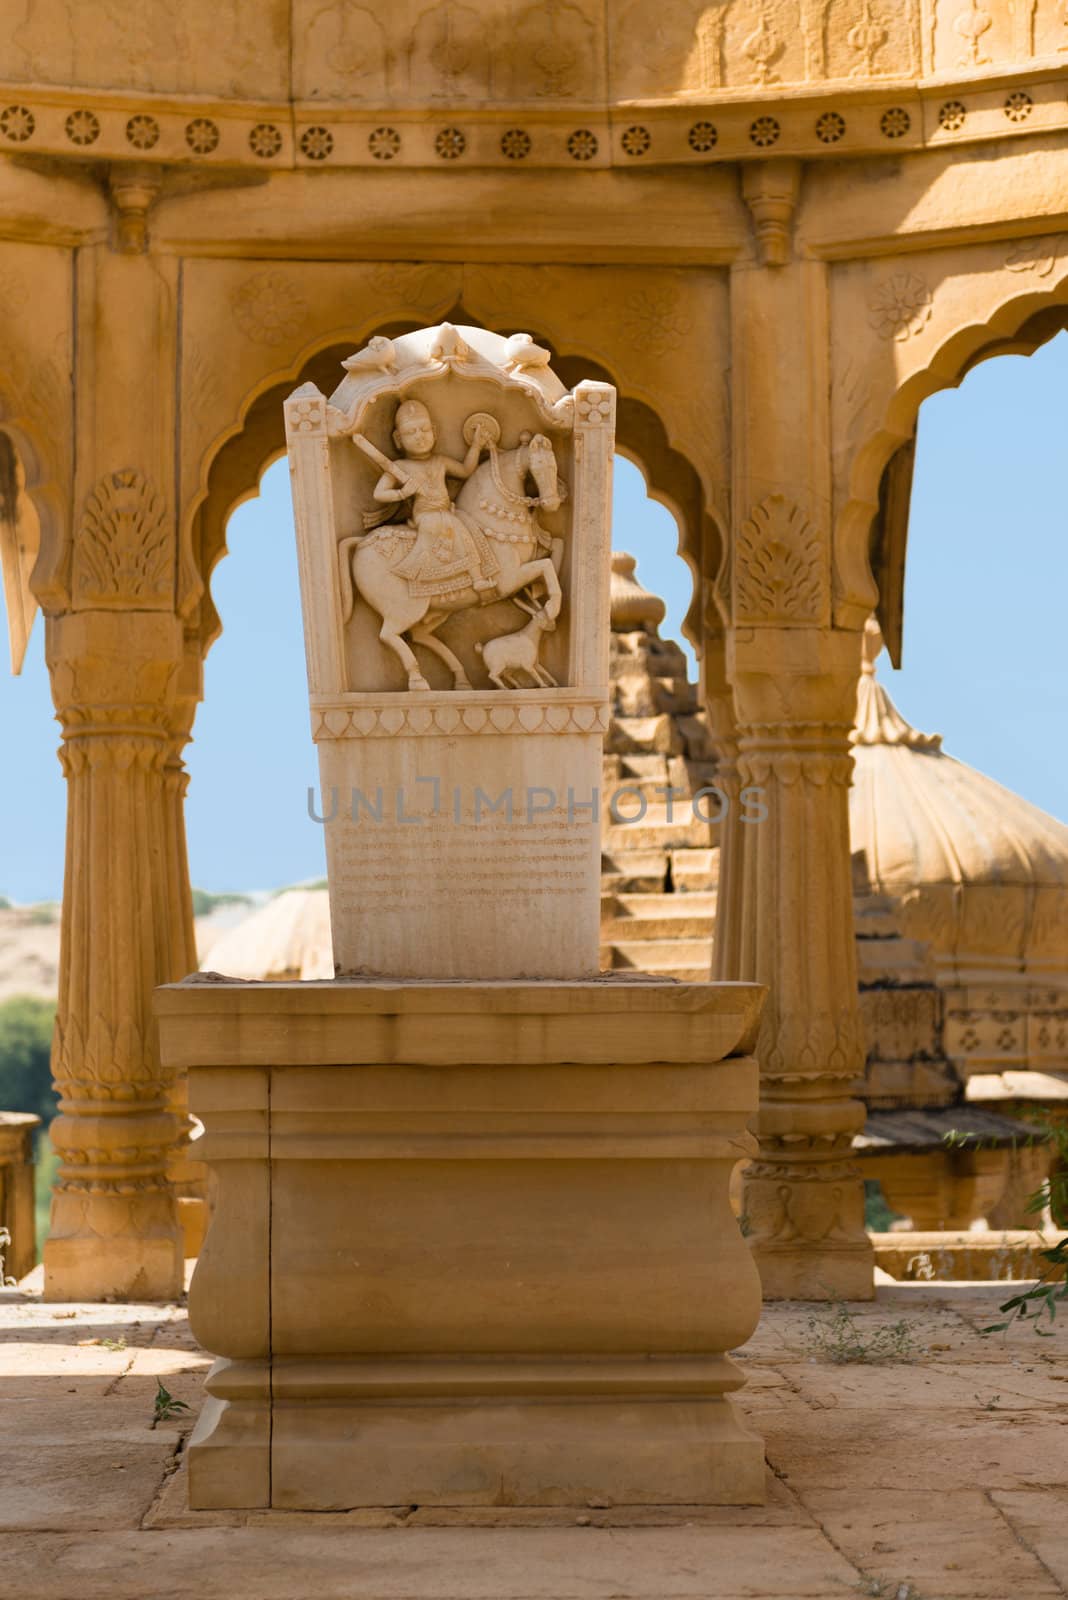 Royal rider image in cenotaphs of ancient Maharajas rulers in Bada Bagh ruins, also called Barabagh (literally Big Garden), Jaisalmer, India